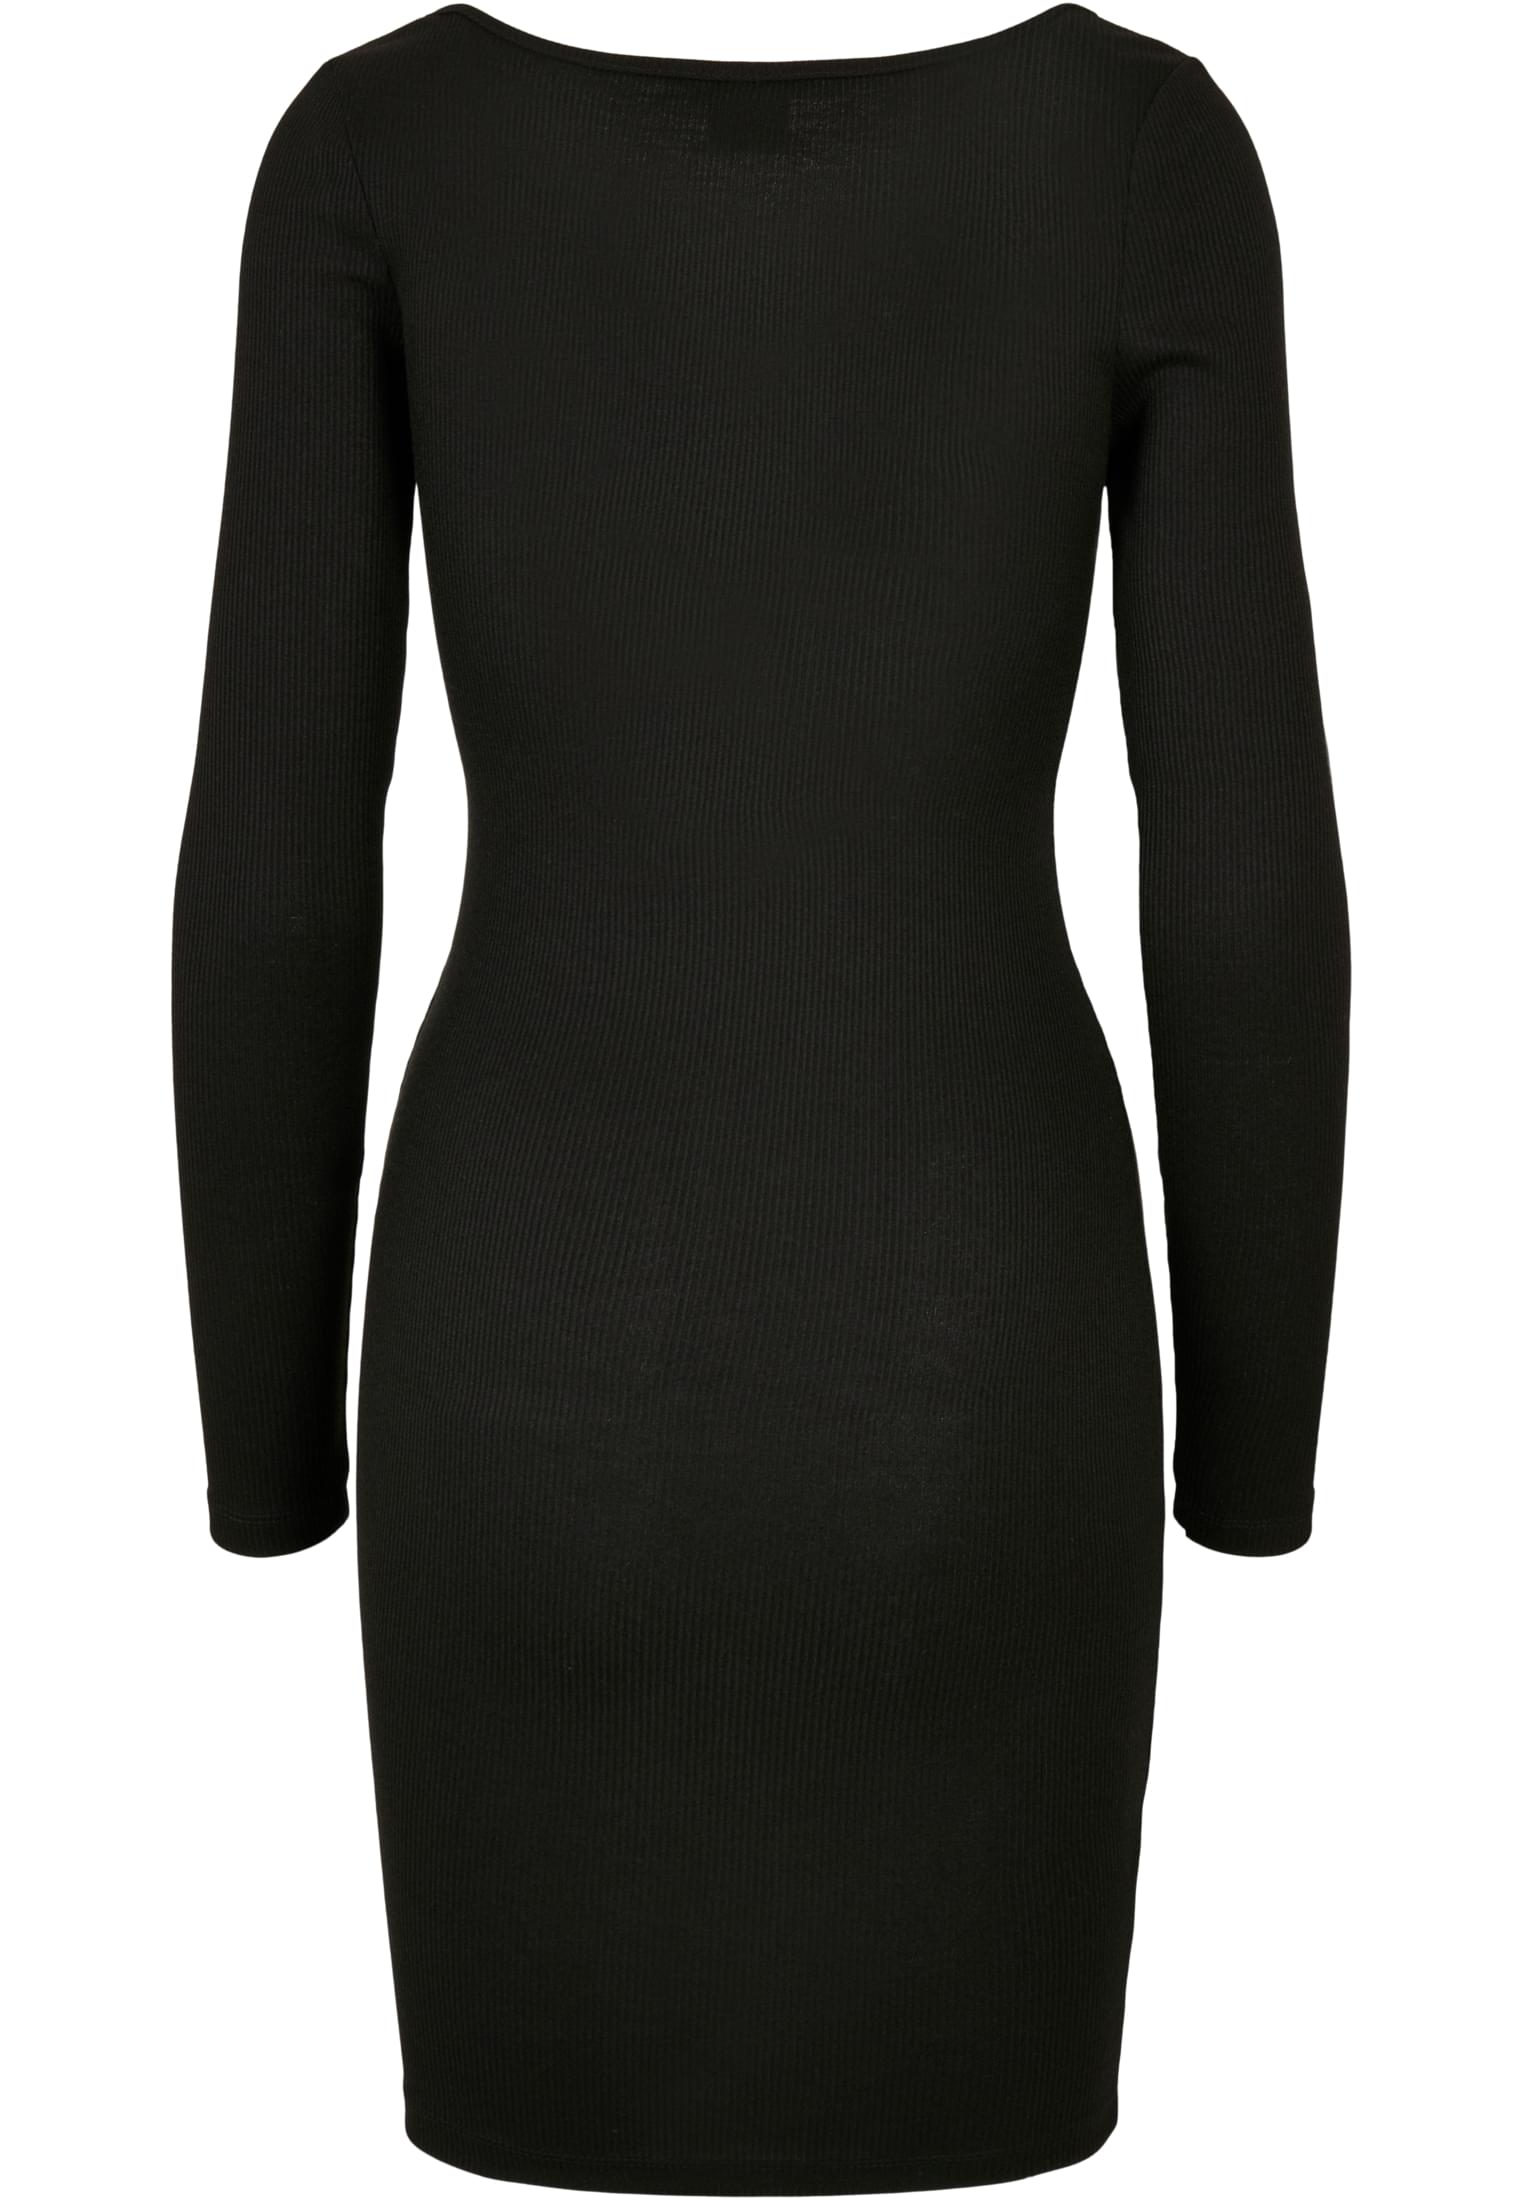 Kleider & R?cke Ladies Rib Squared Neckline Dress in Farbe black